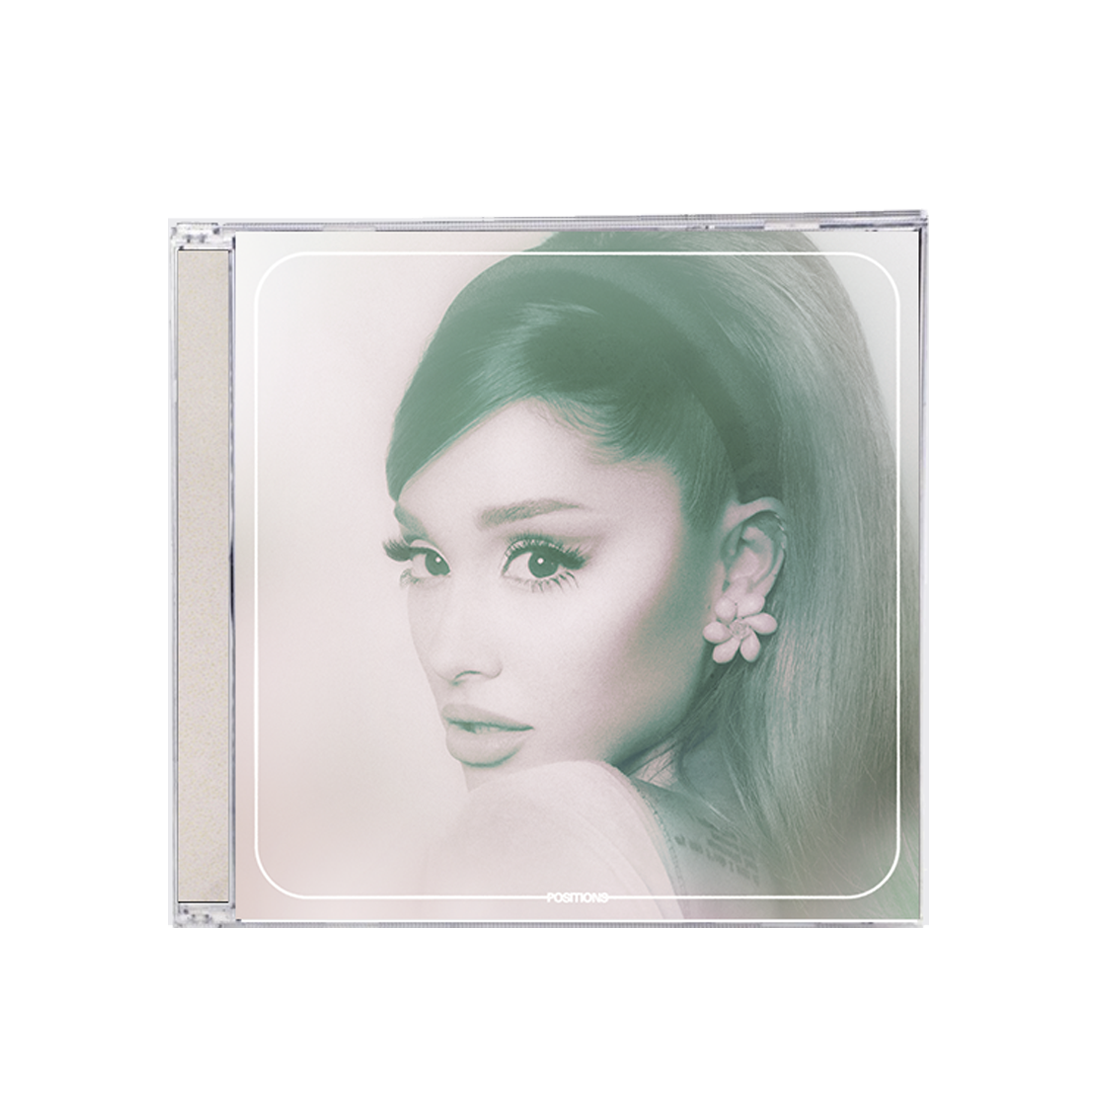 Ariana Grande - Positions CD - Alternate Cover [Version 1]